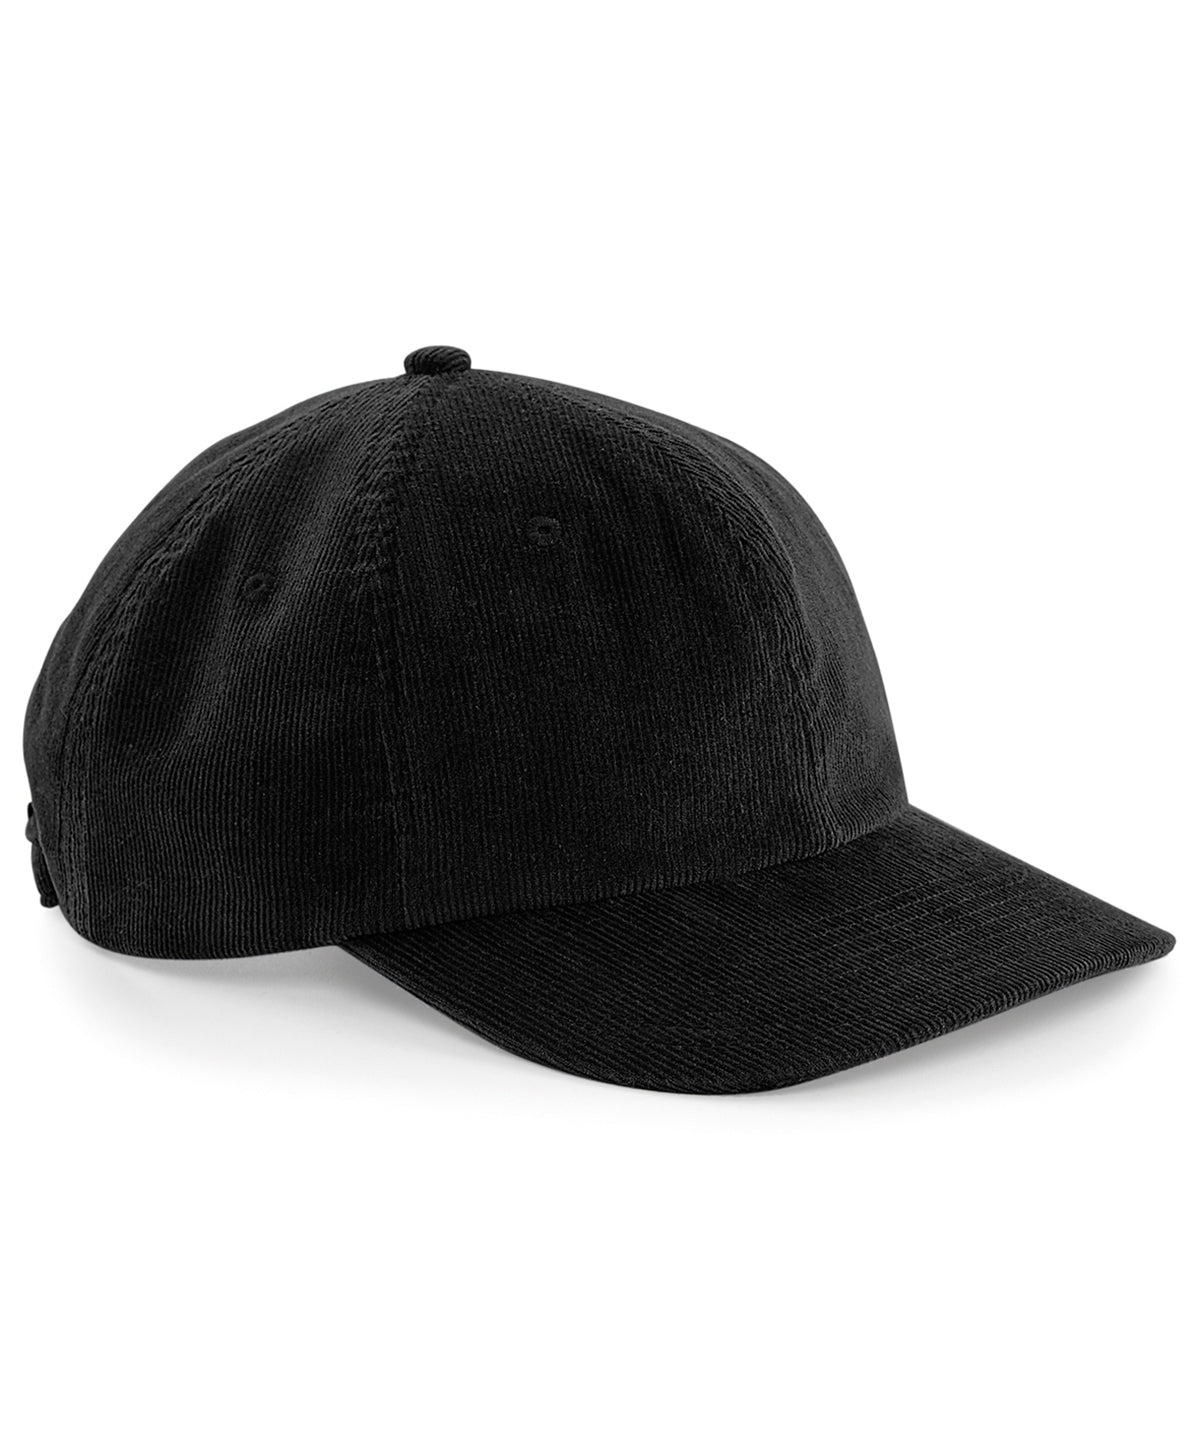 Personalised Caps - Black Beechfield Heritage cord cap